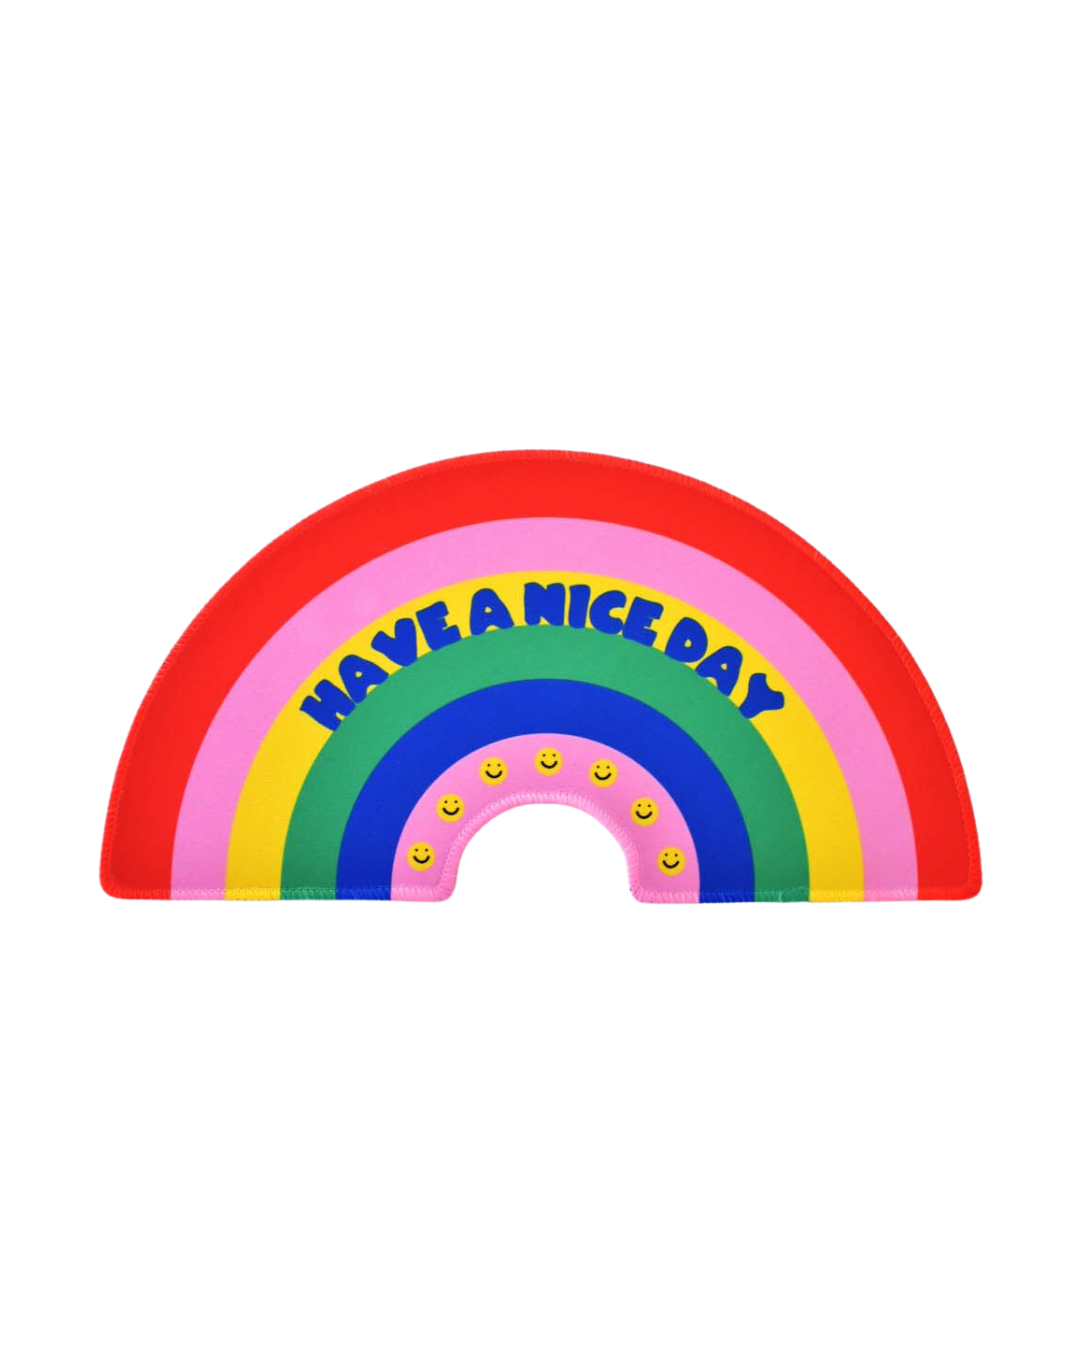 Rainbow Mousepad